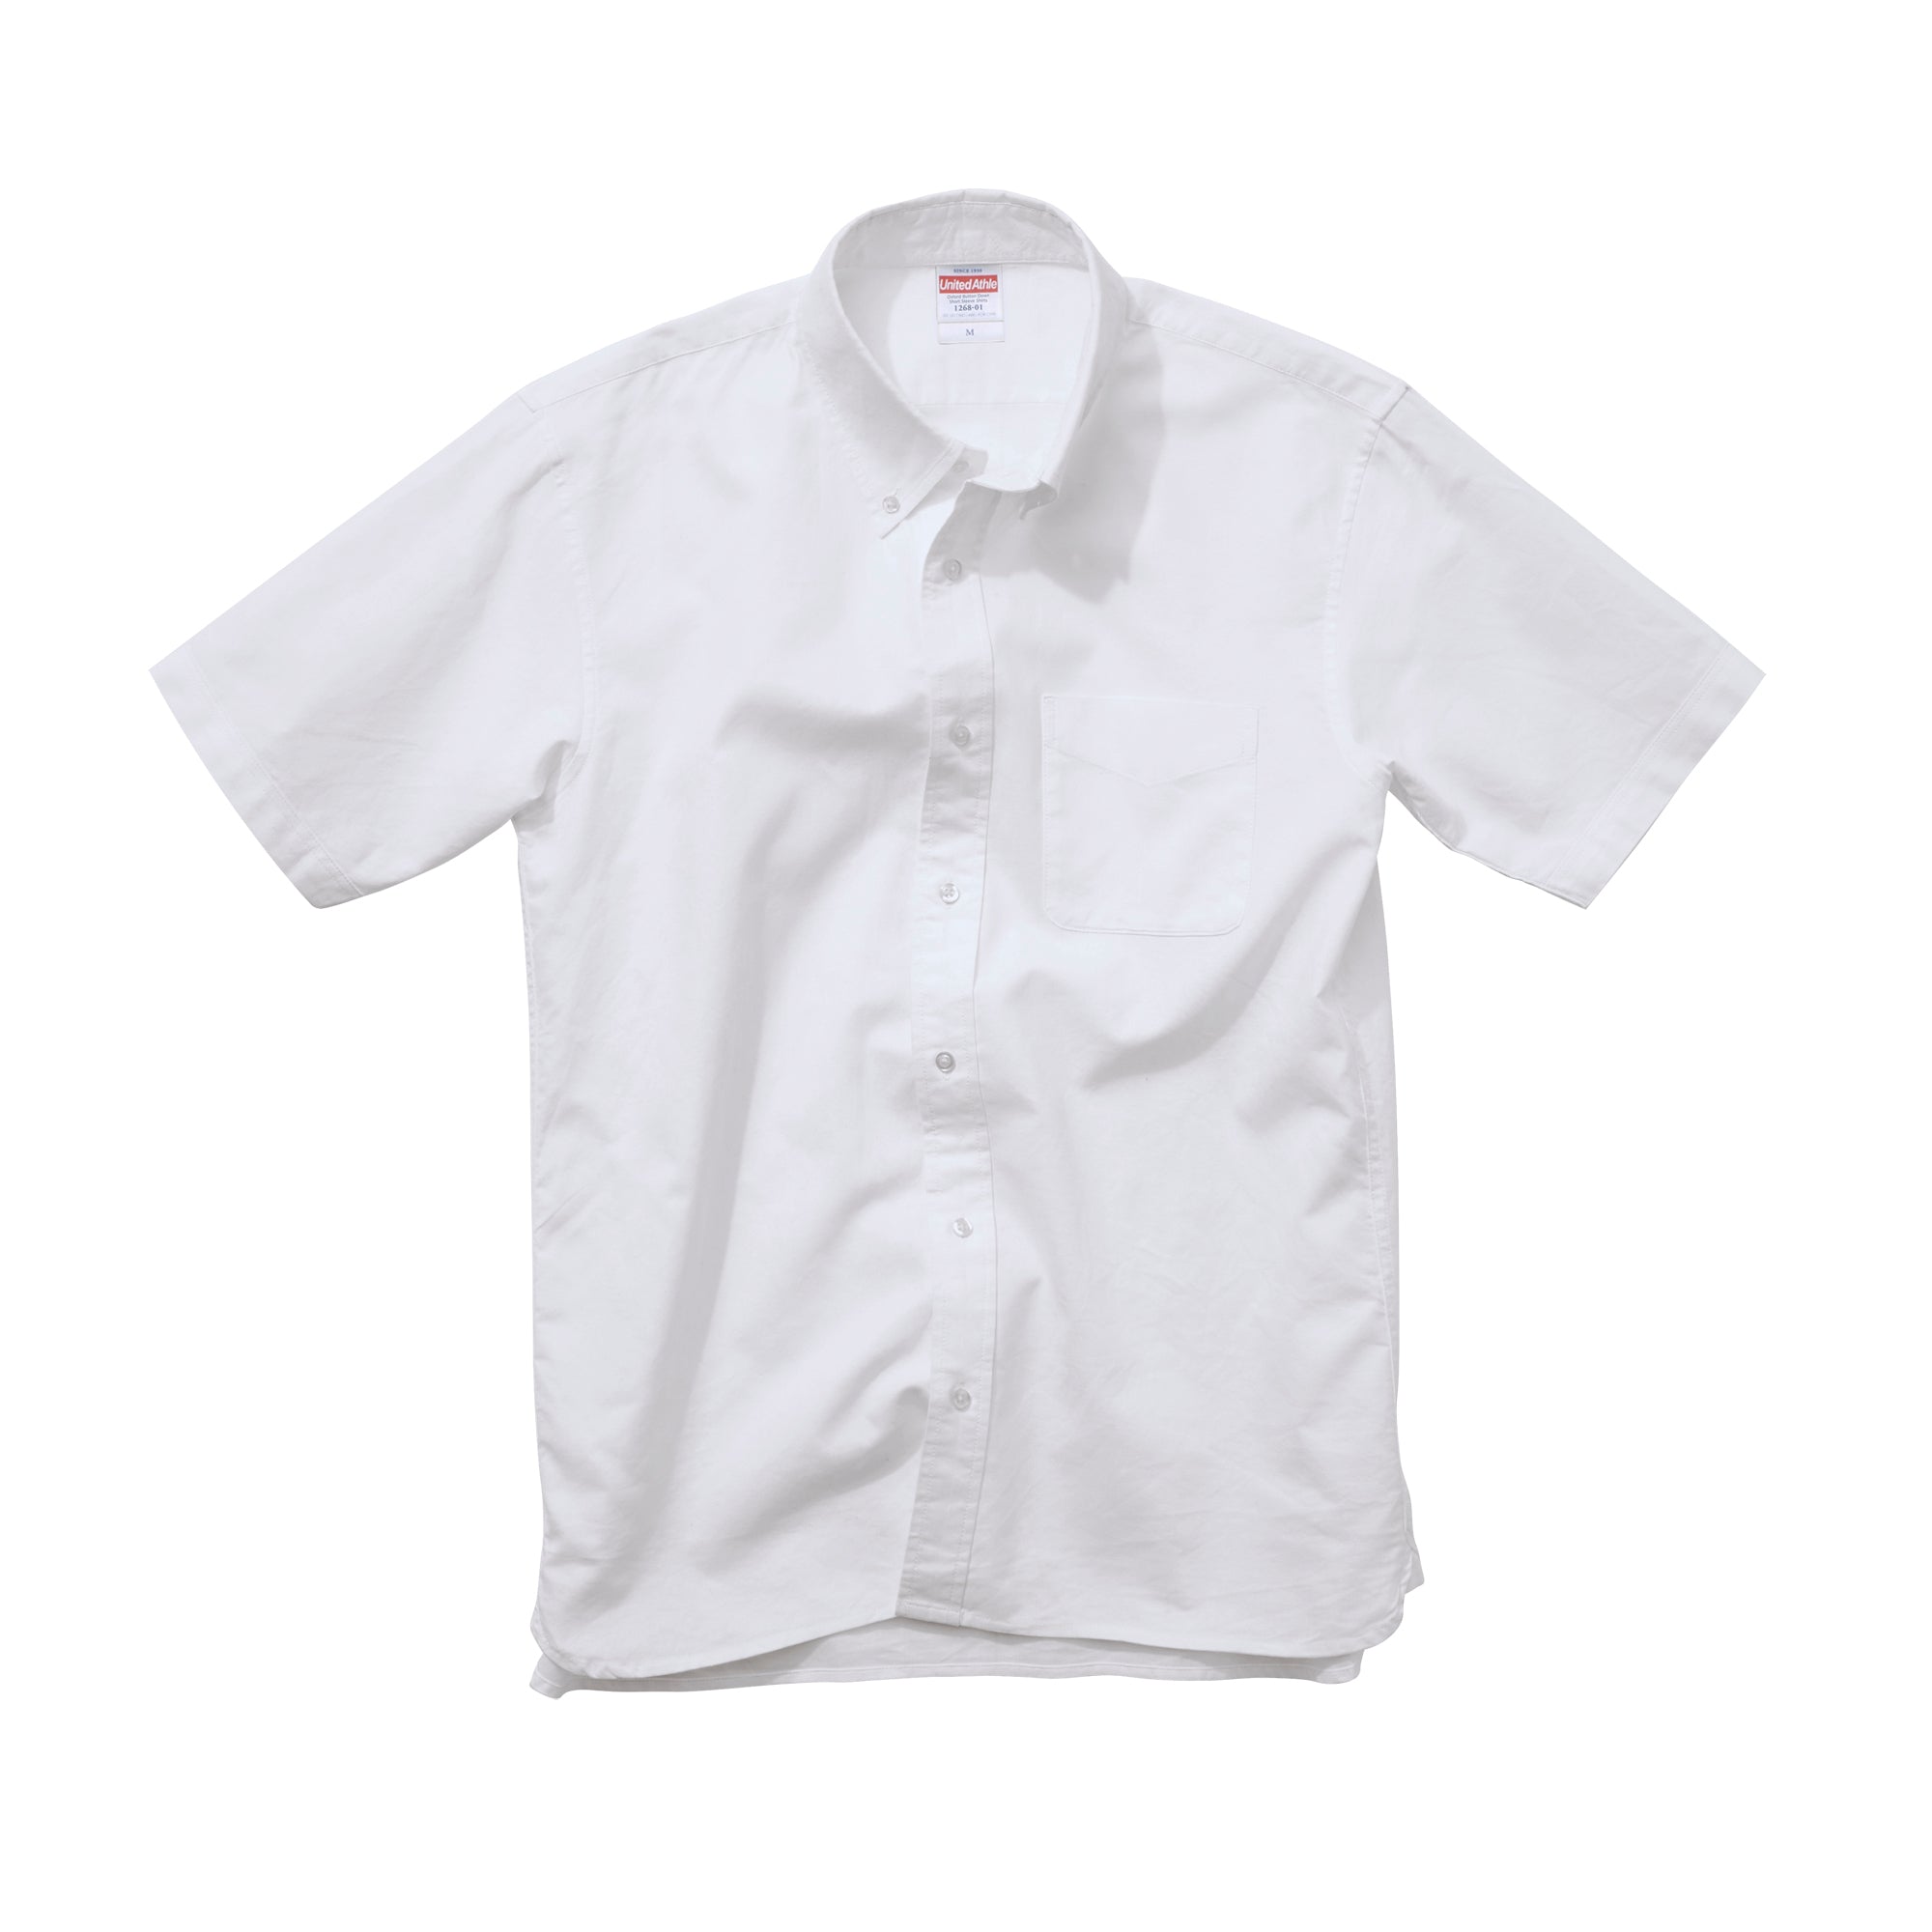 1268 - Oxford Button Down Short Sleeve Shirt - White